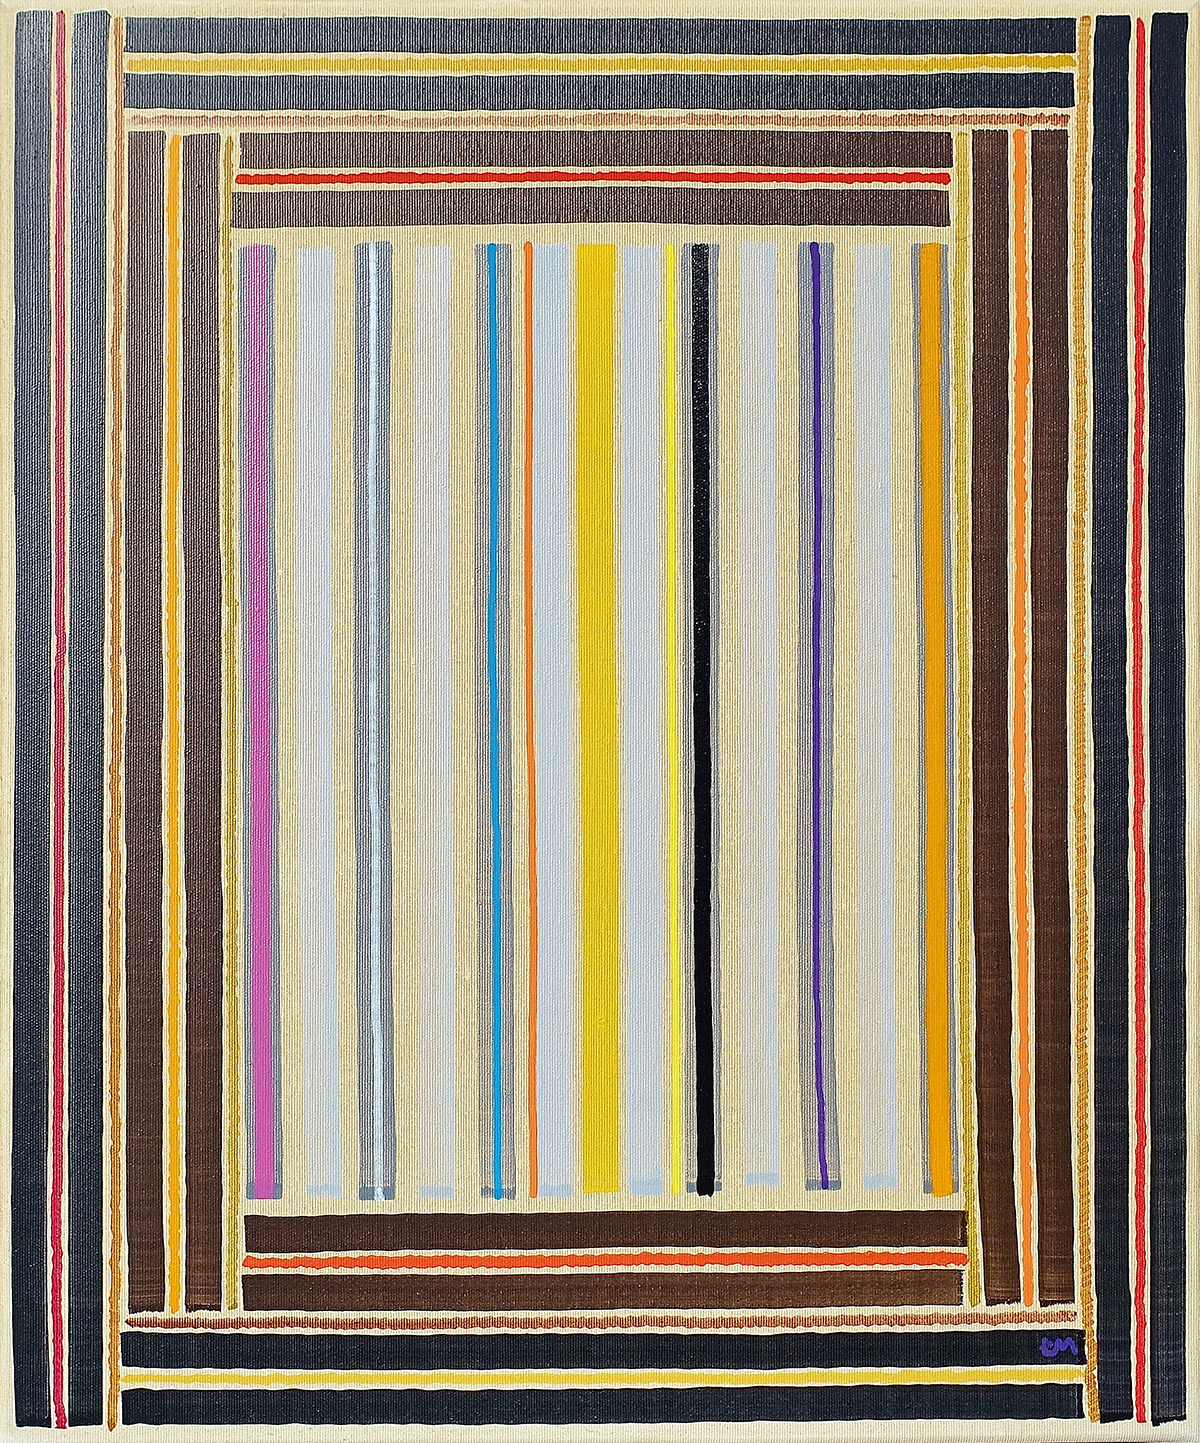 Łukasz Majcherowicz - Lararium (Oil and acrylic on canvas | Größe: 58 x 68 cm | Preis: 4500 PLN)